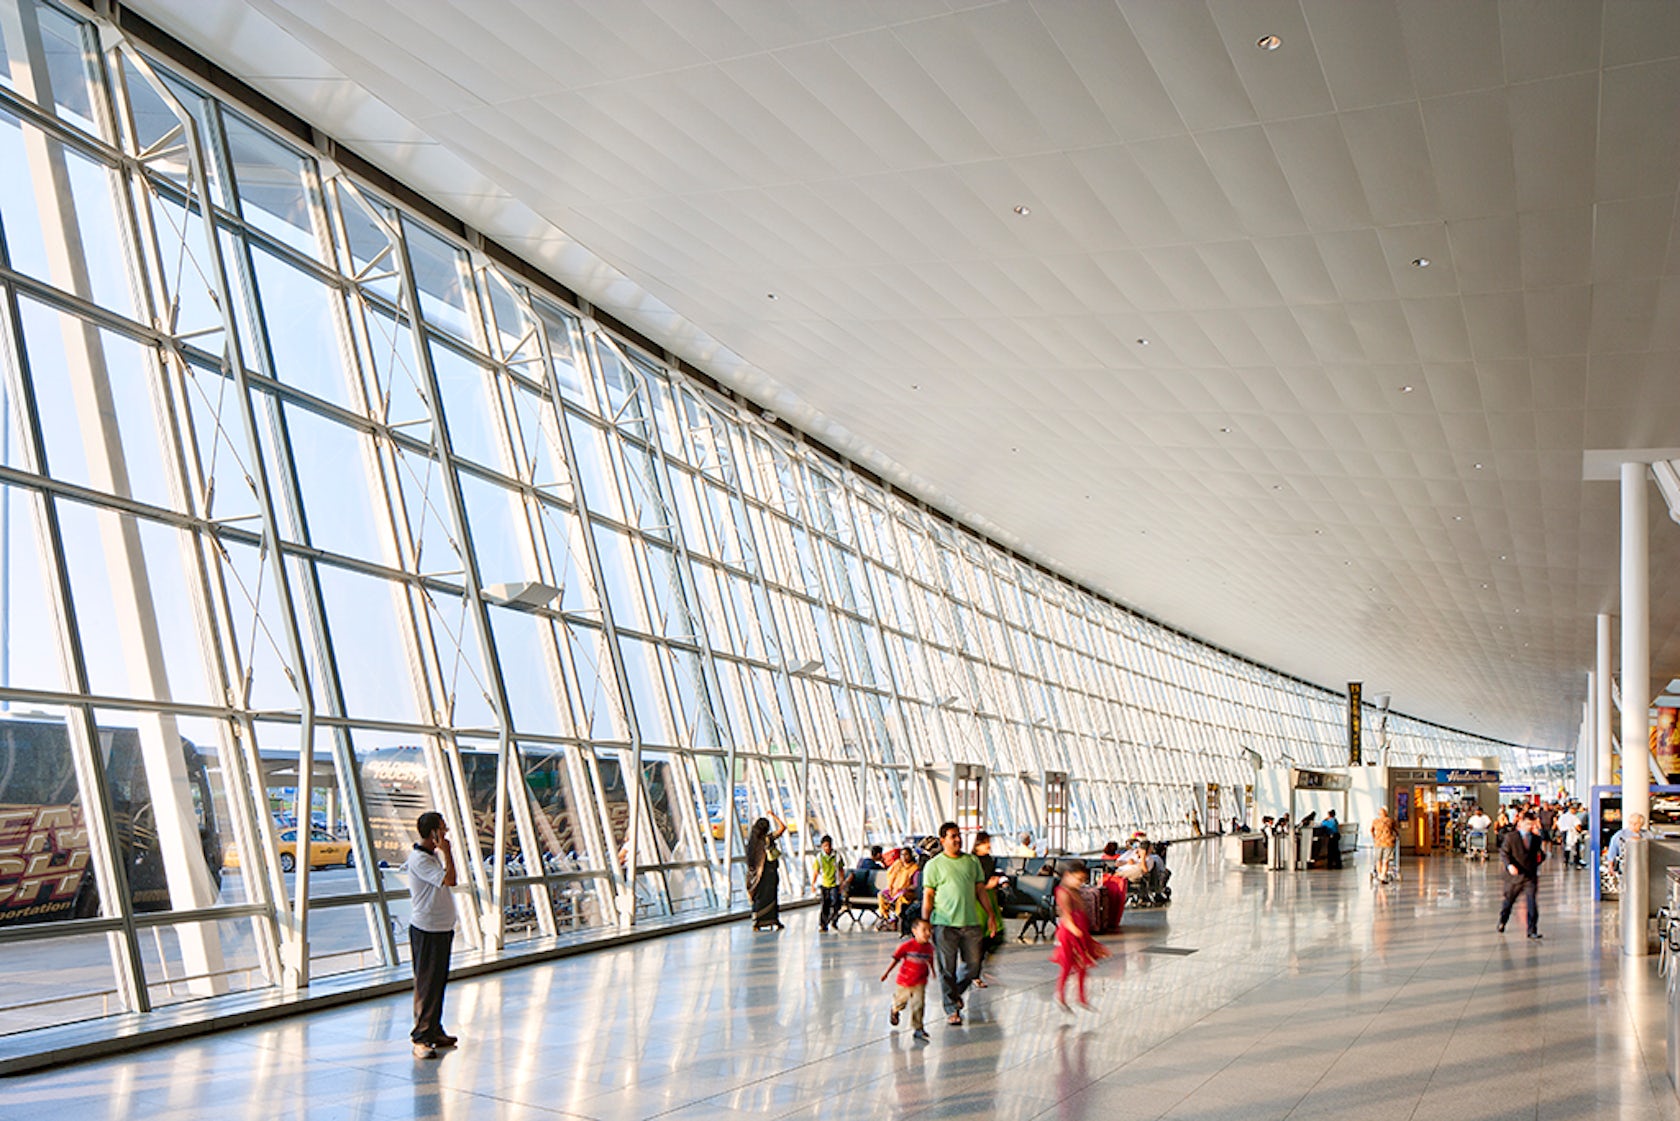 John F Kennedy International Airport International Arrivals Building